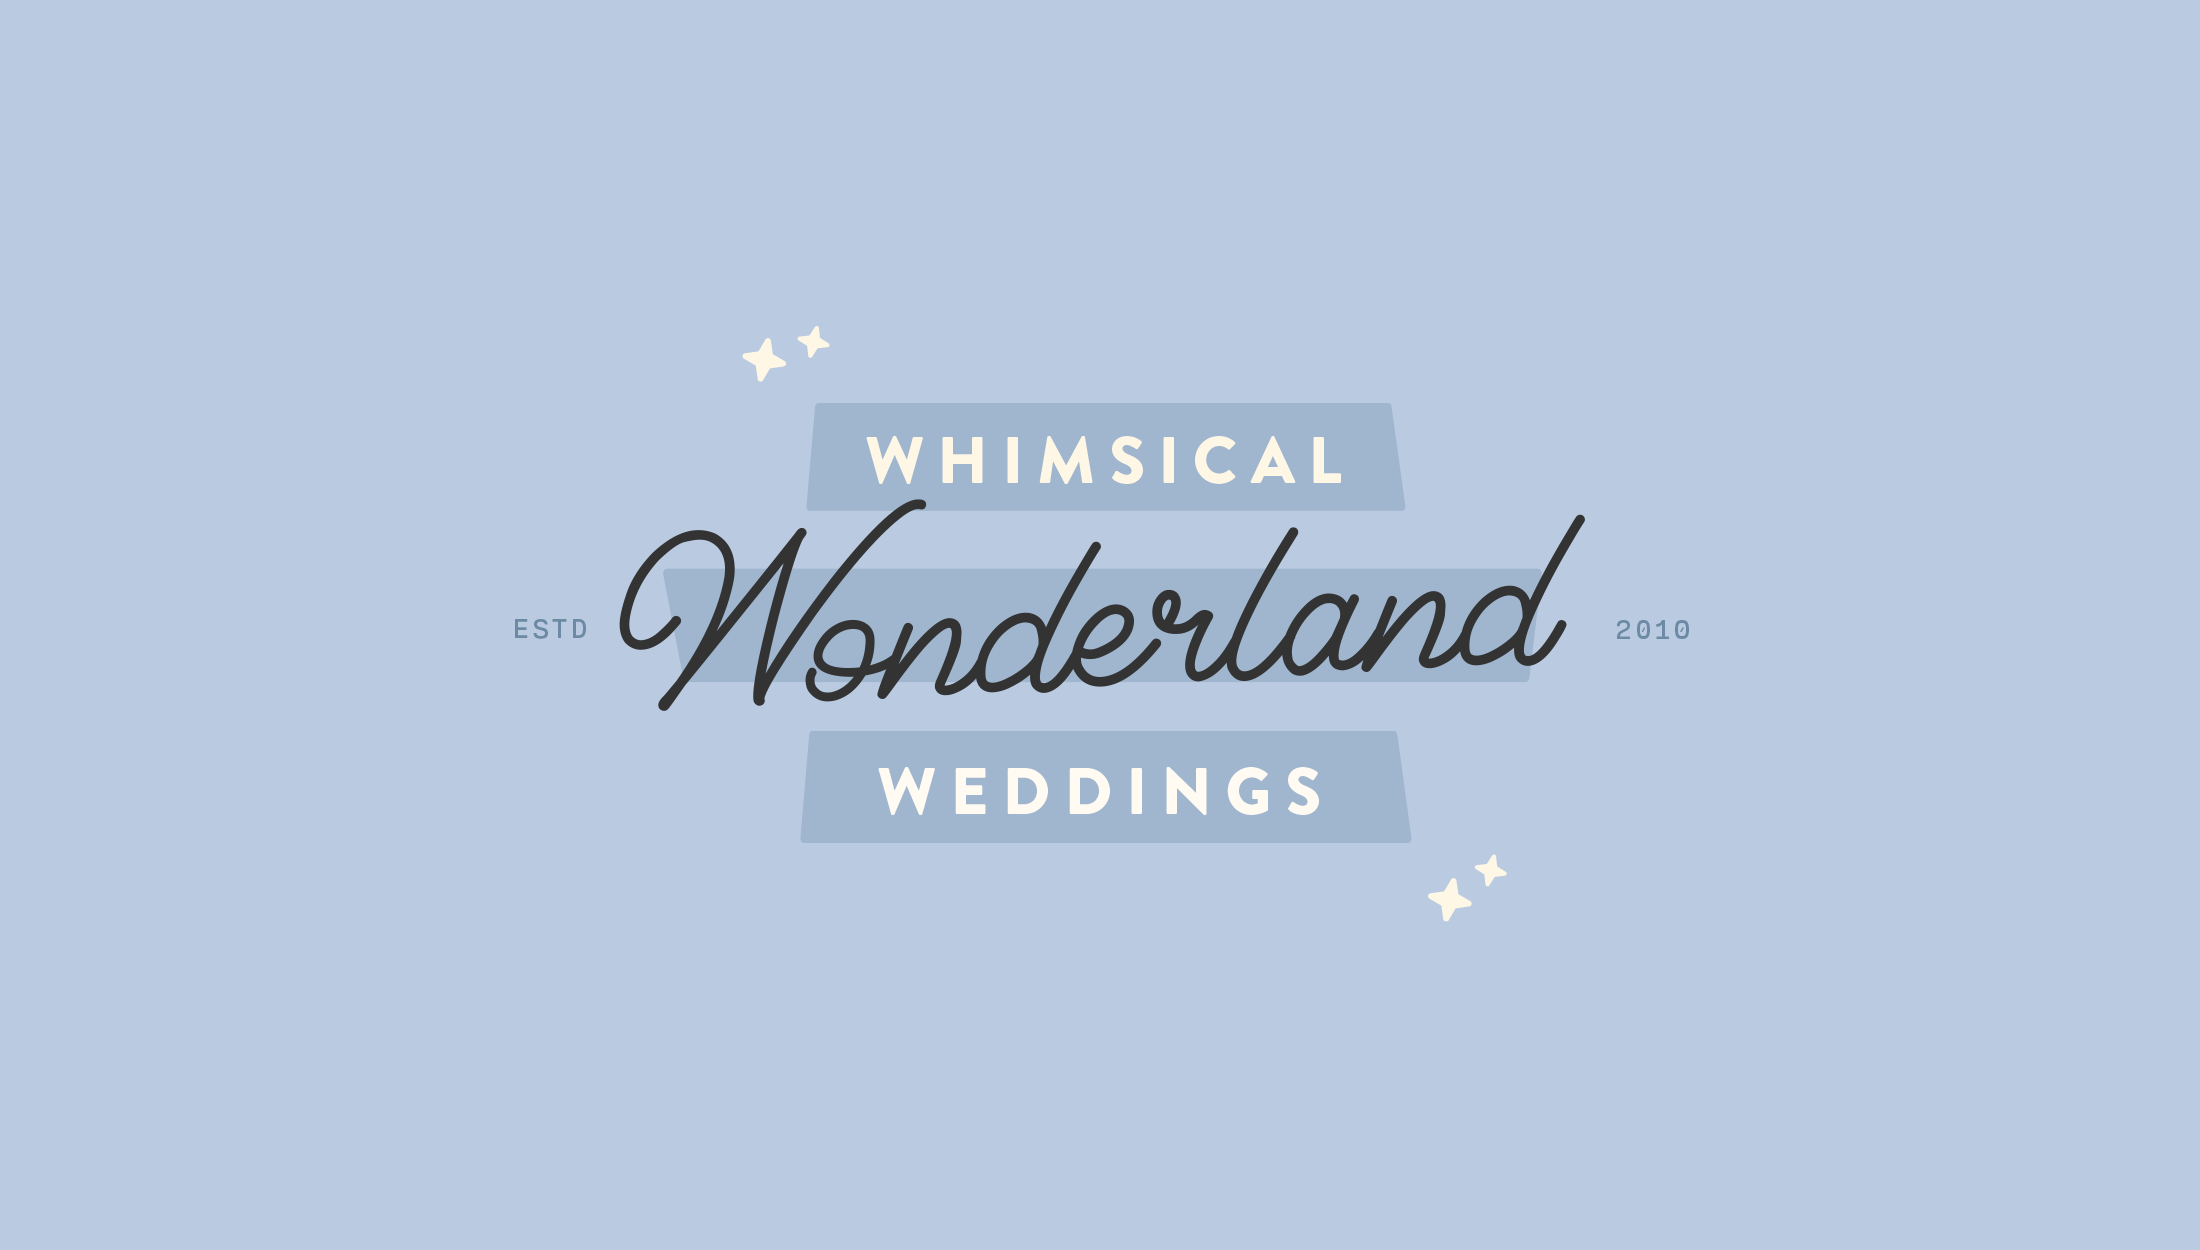 Logo design for Whimsical Wonderland Weddings, UK wedding inspiration blog and supplier - designed by Wiltshire-based graphic designer, Kaye Huett